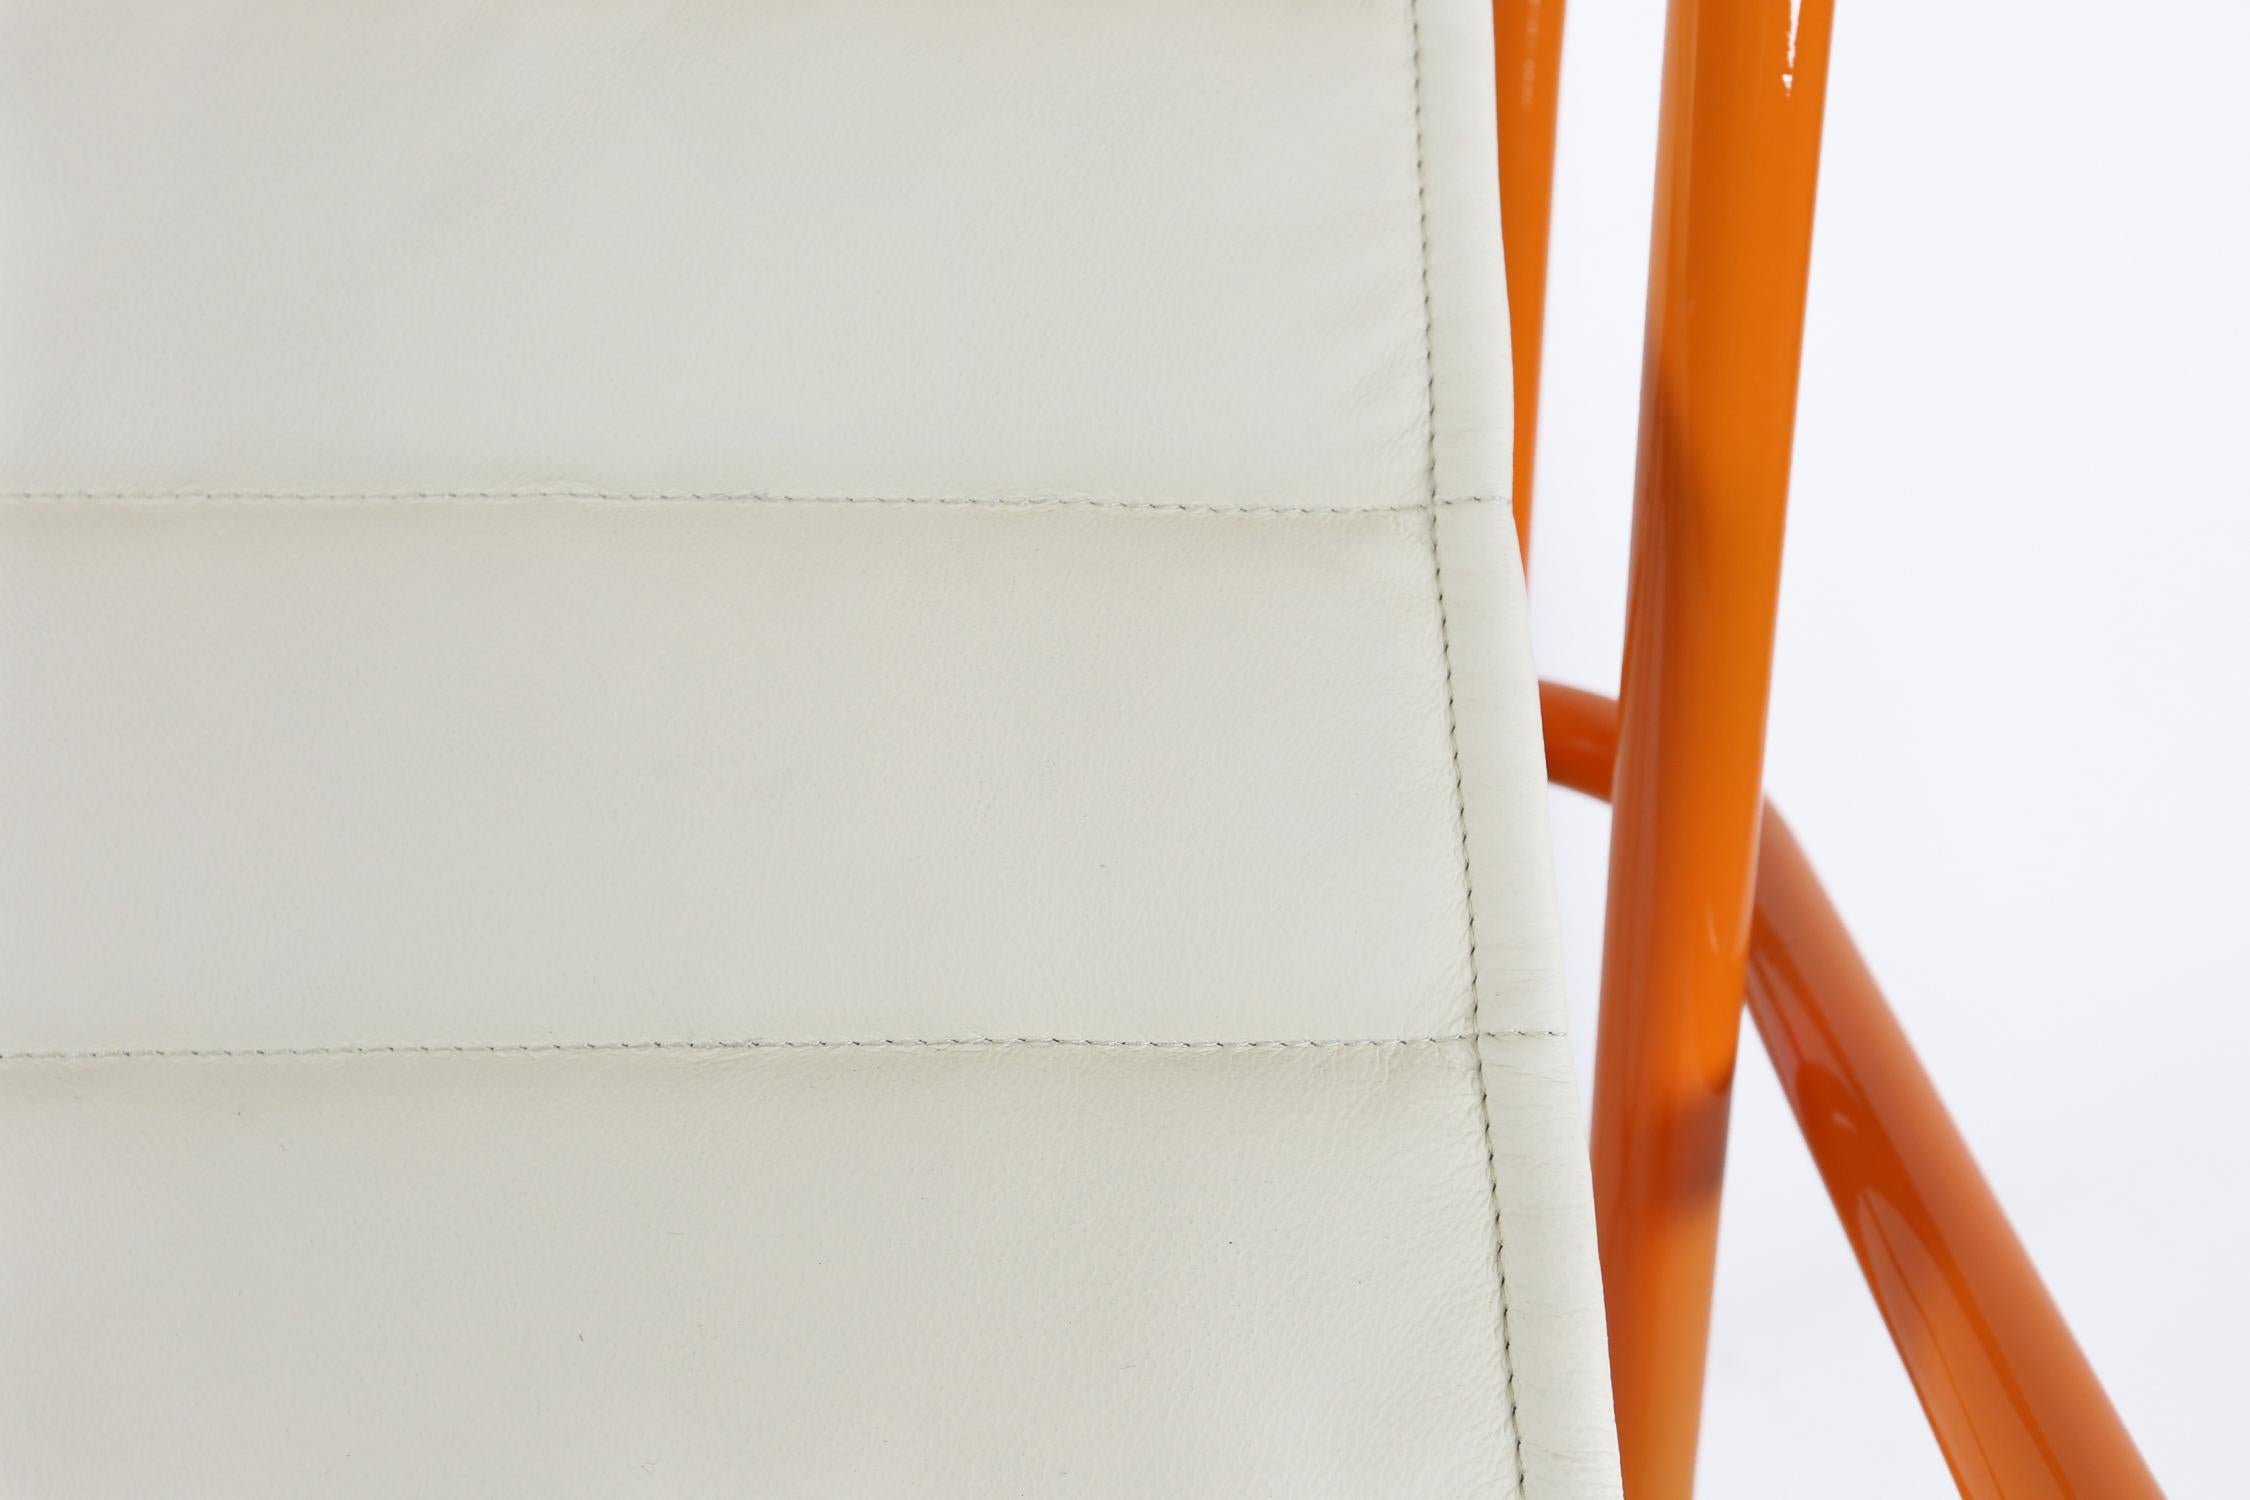 Gae Aulenti Locus Solus Lounge Chair in Orange Colored Metal and Leather 1